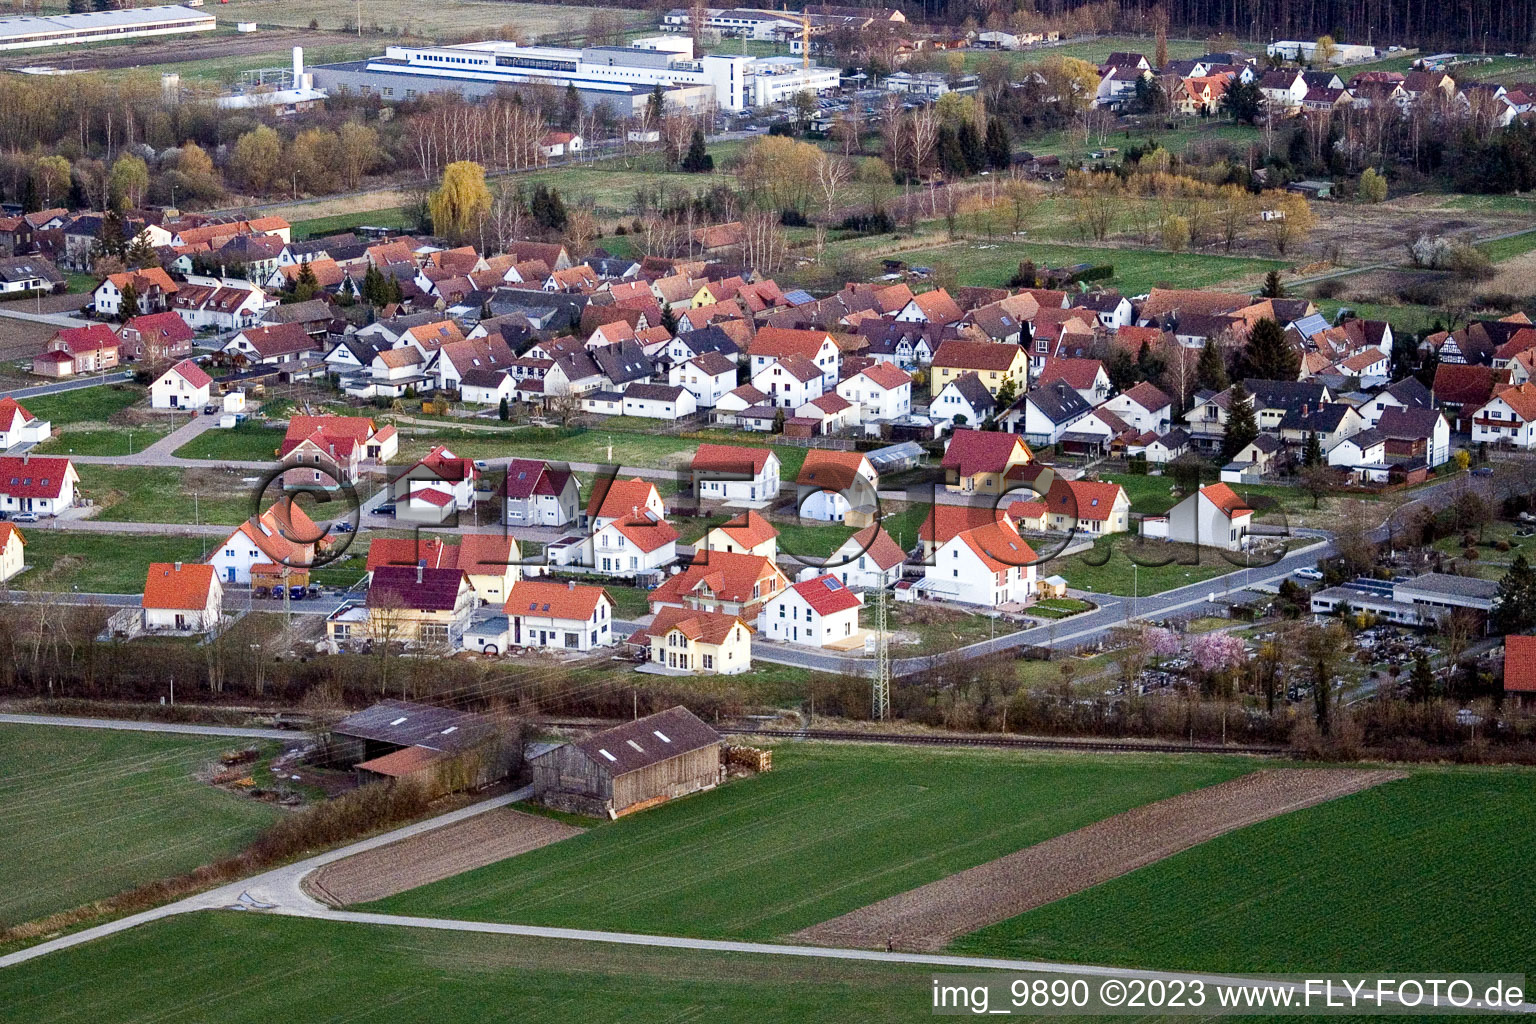 New development area NE in the district Schaidt in Wörth am Rhein in the state Rhineland-Palatinate, Germany from above